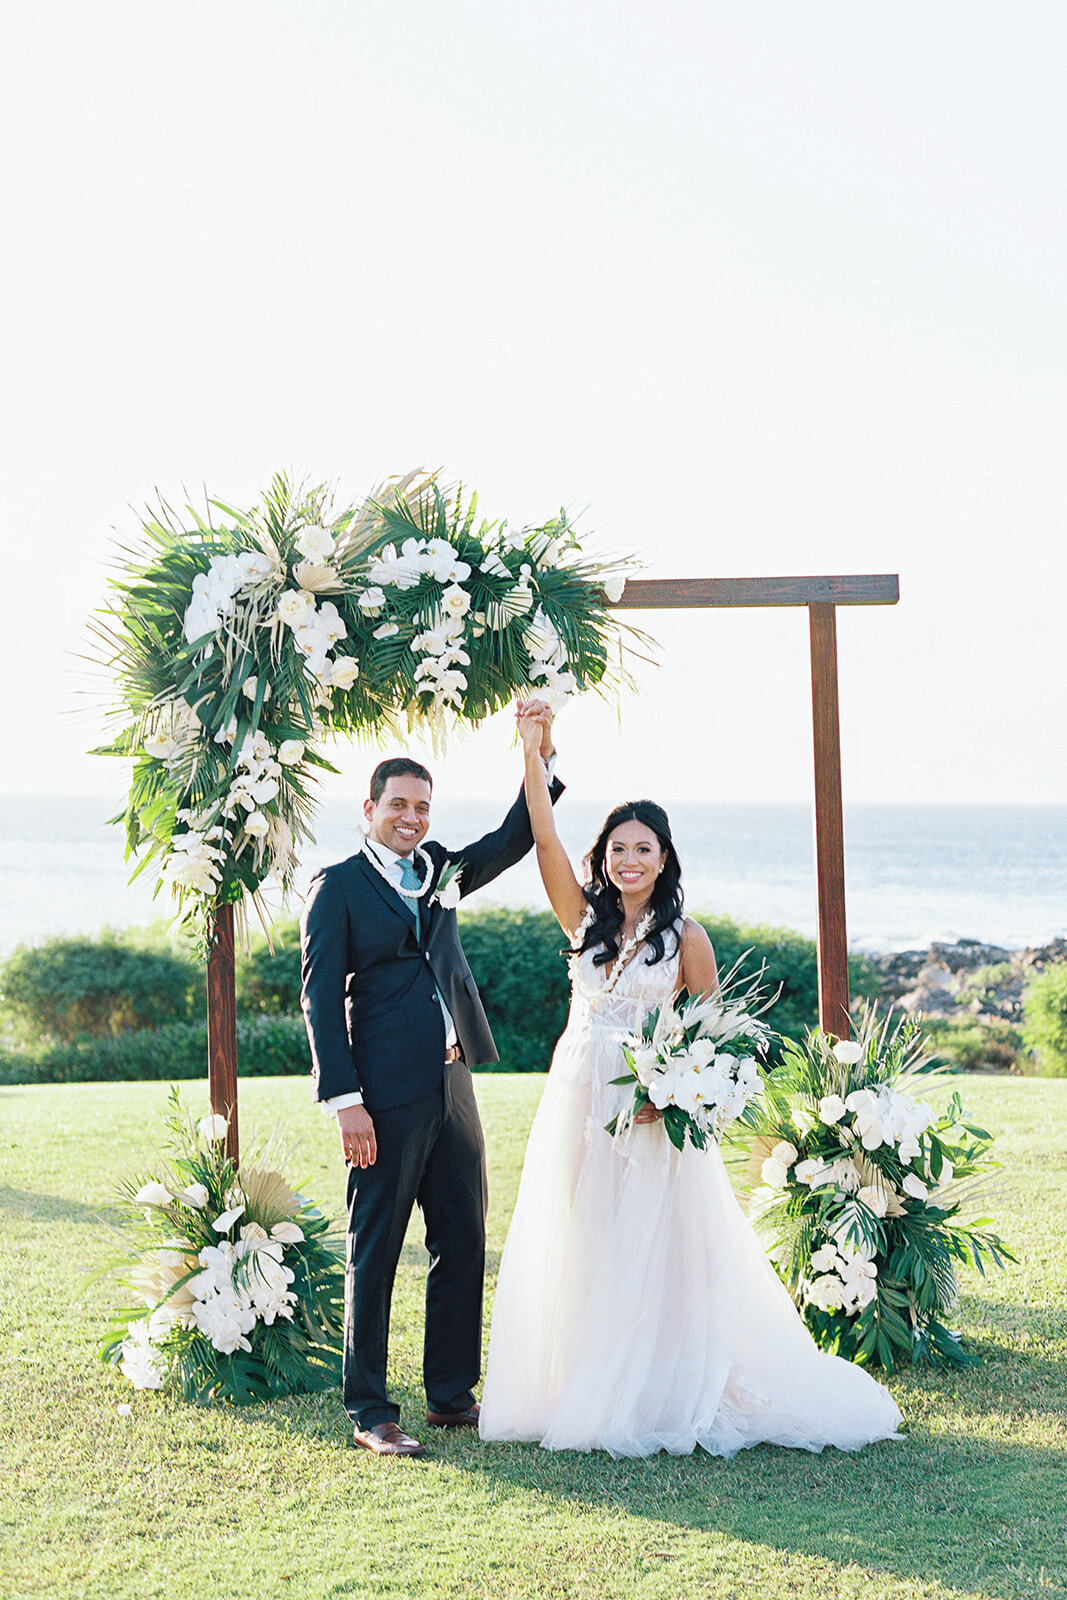 Maui Love Weddings and Events Maui Hawaii Full Service Wedding Planning Coordinating Event Design Company Destination Wedding 4